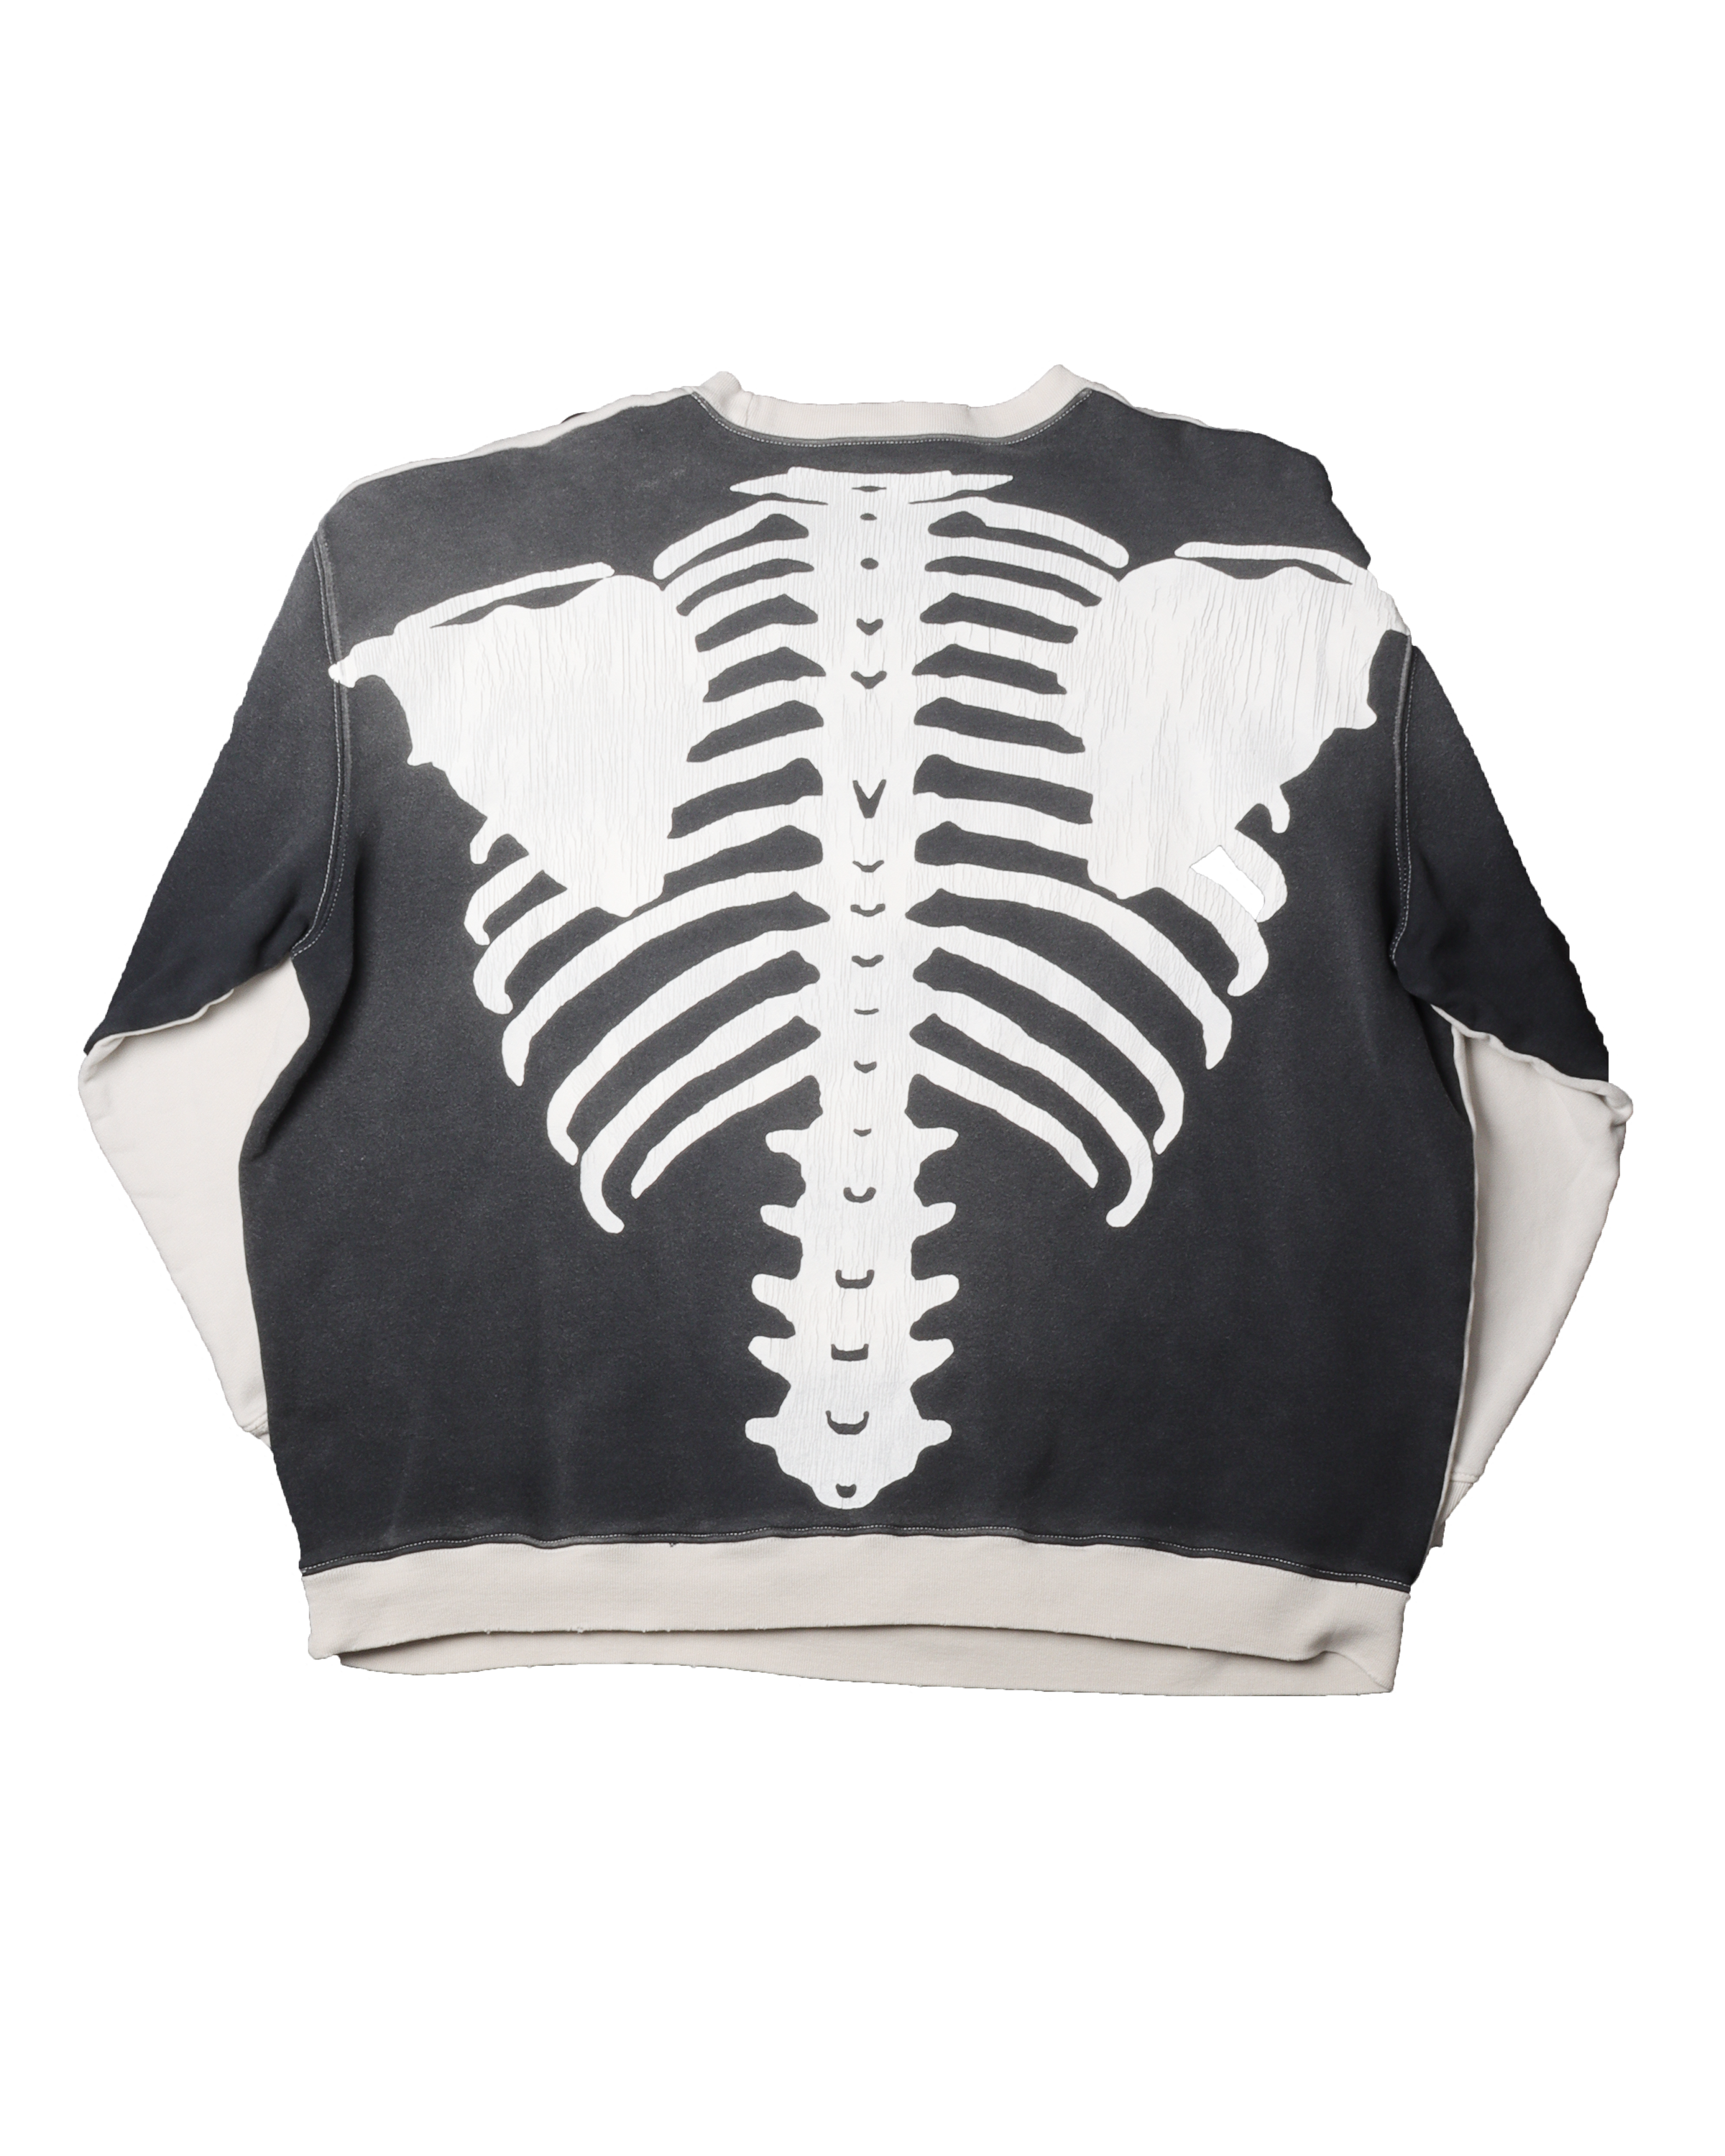 Kountry Skeleton Crewneck Sweatshirt